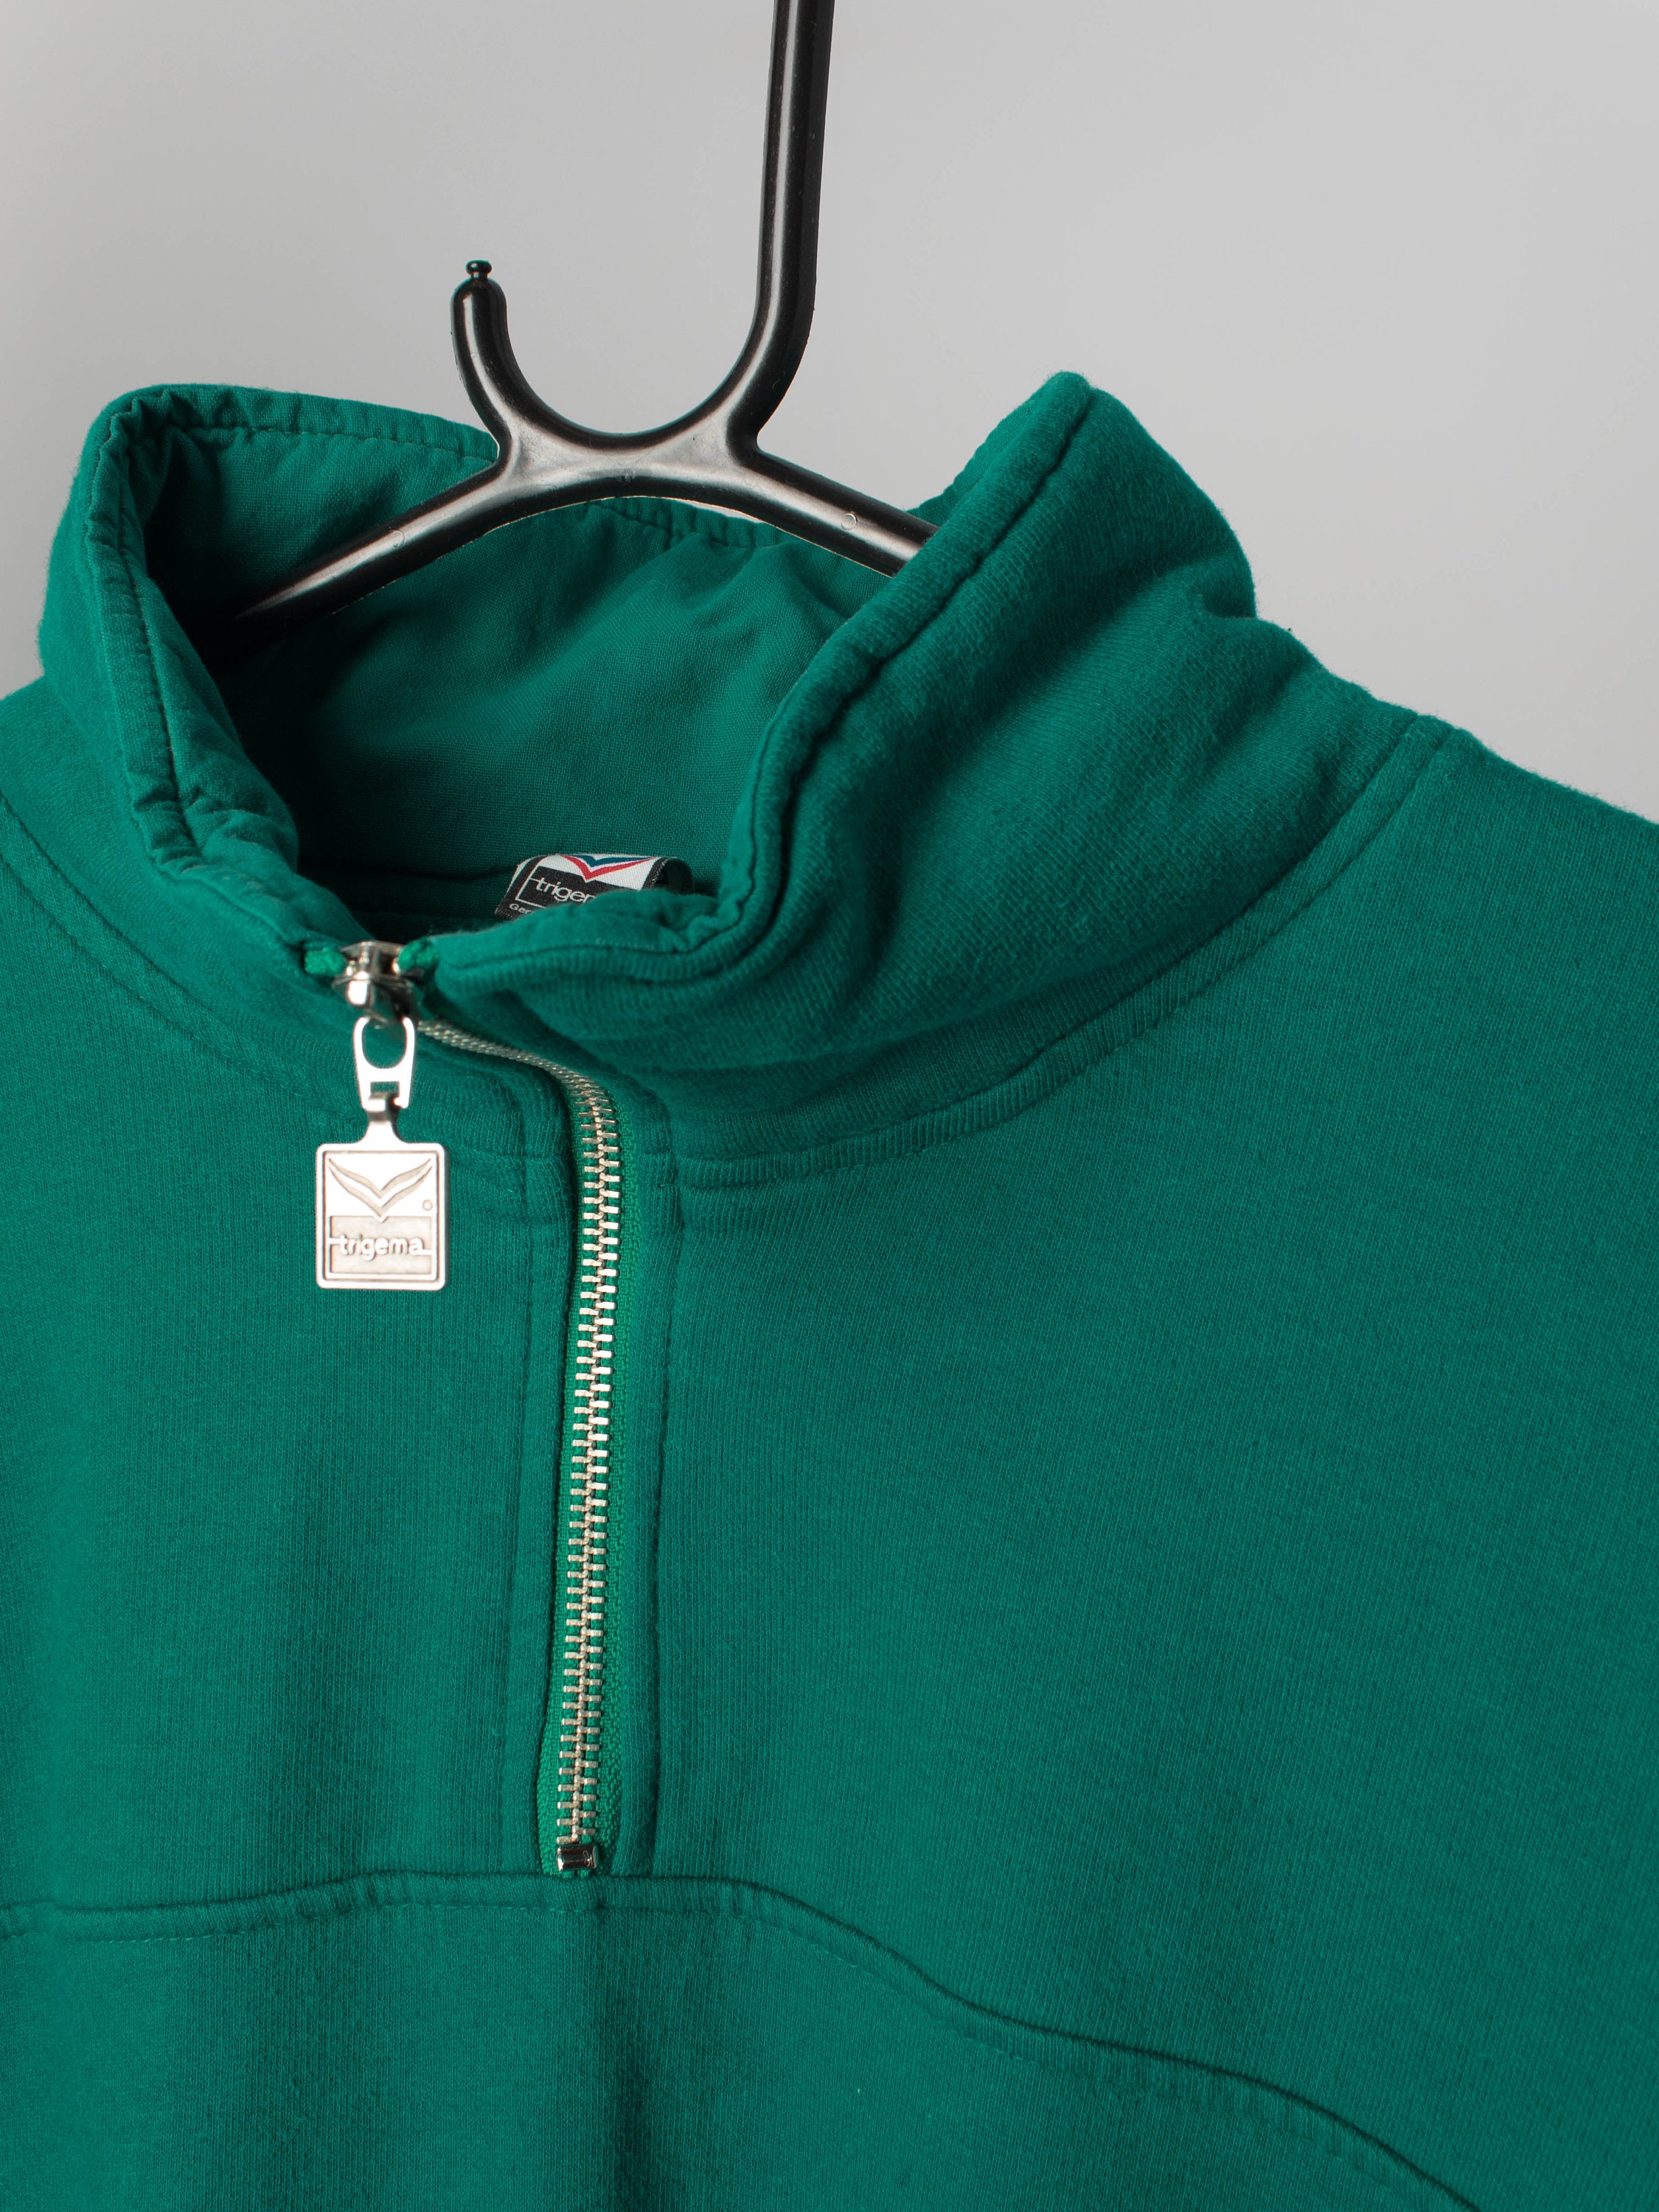 Teal-green Mens Sweatshirt Vintage Zip, Norway Quarter Trigema - Cotton Etsy Large With